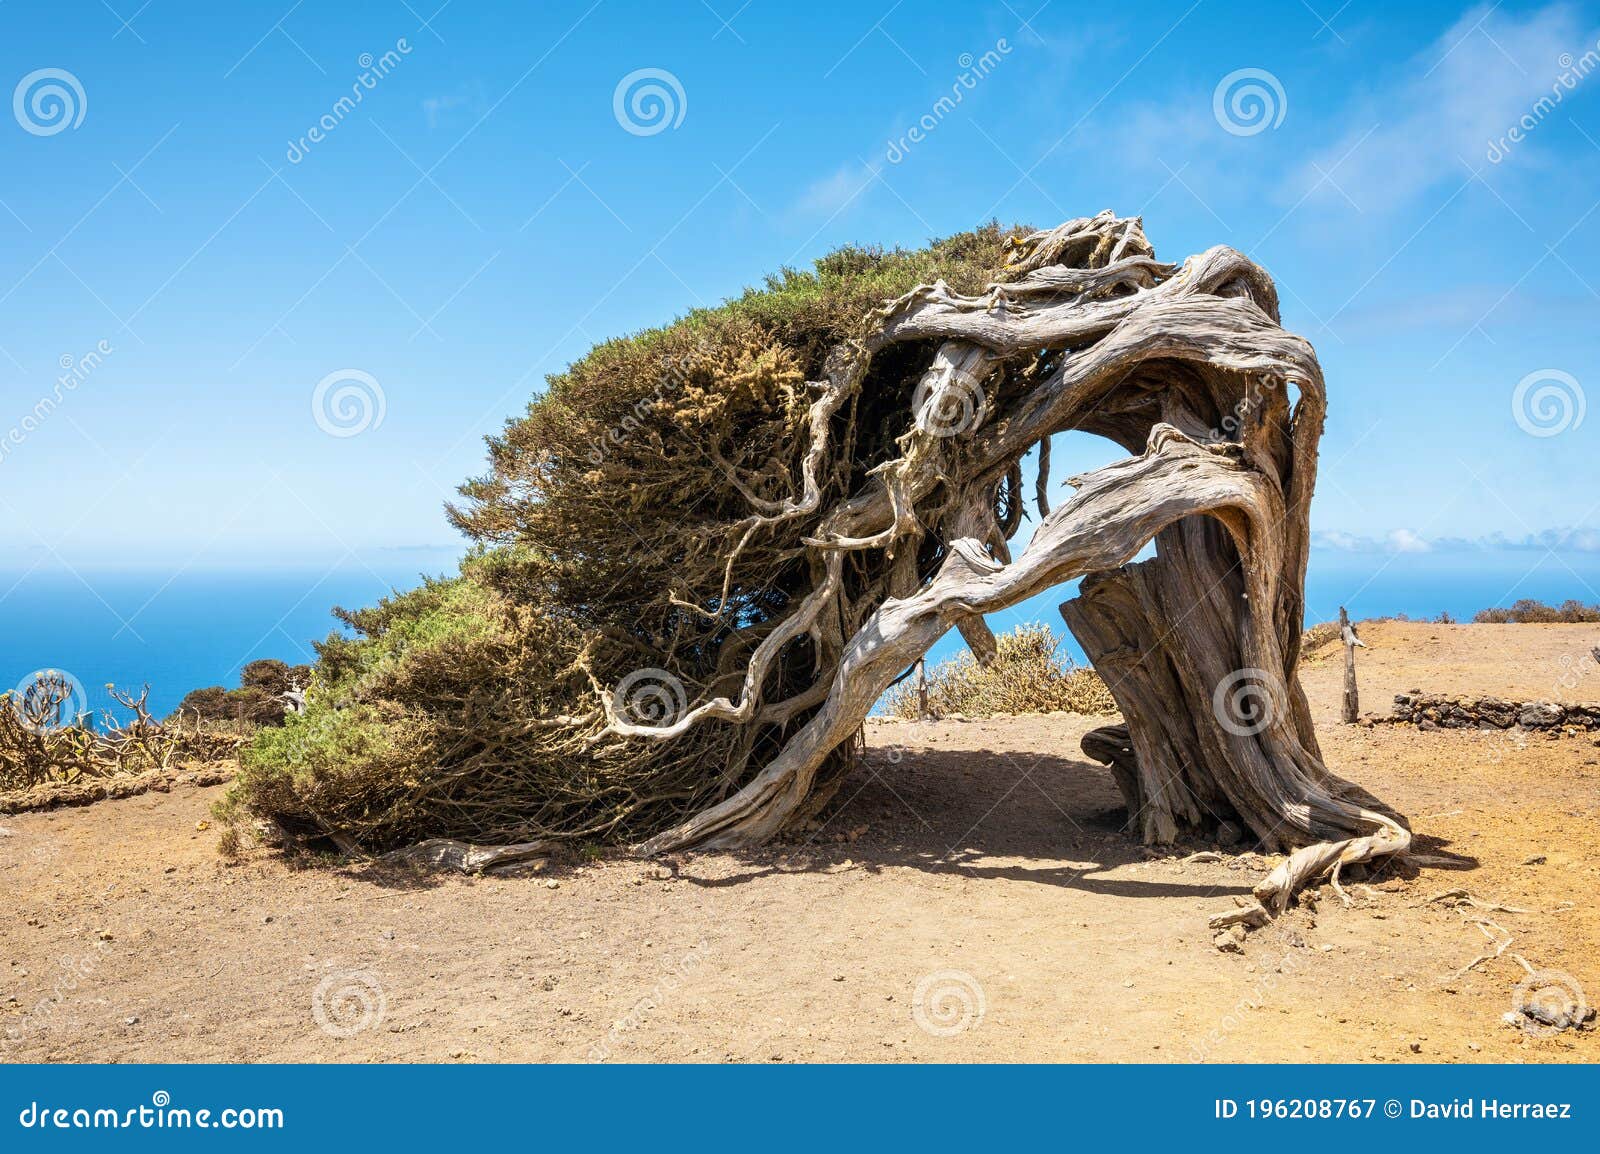 juniper tree bent by wind. famous landmark in el hierro, canary islands